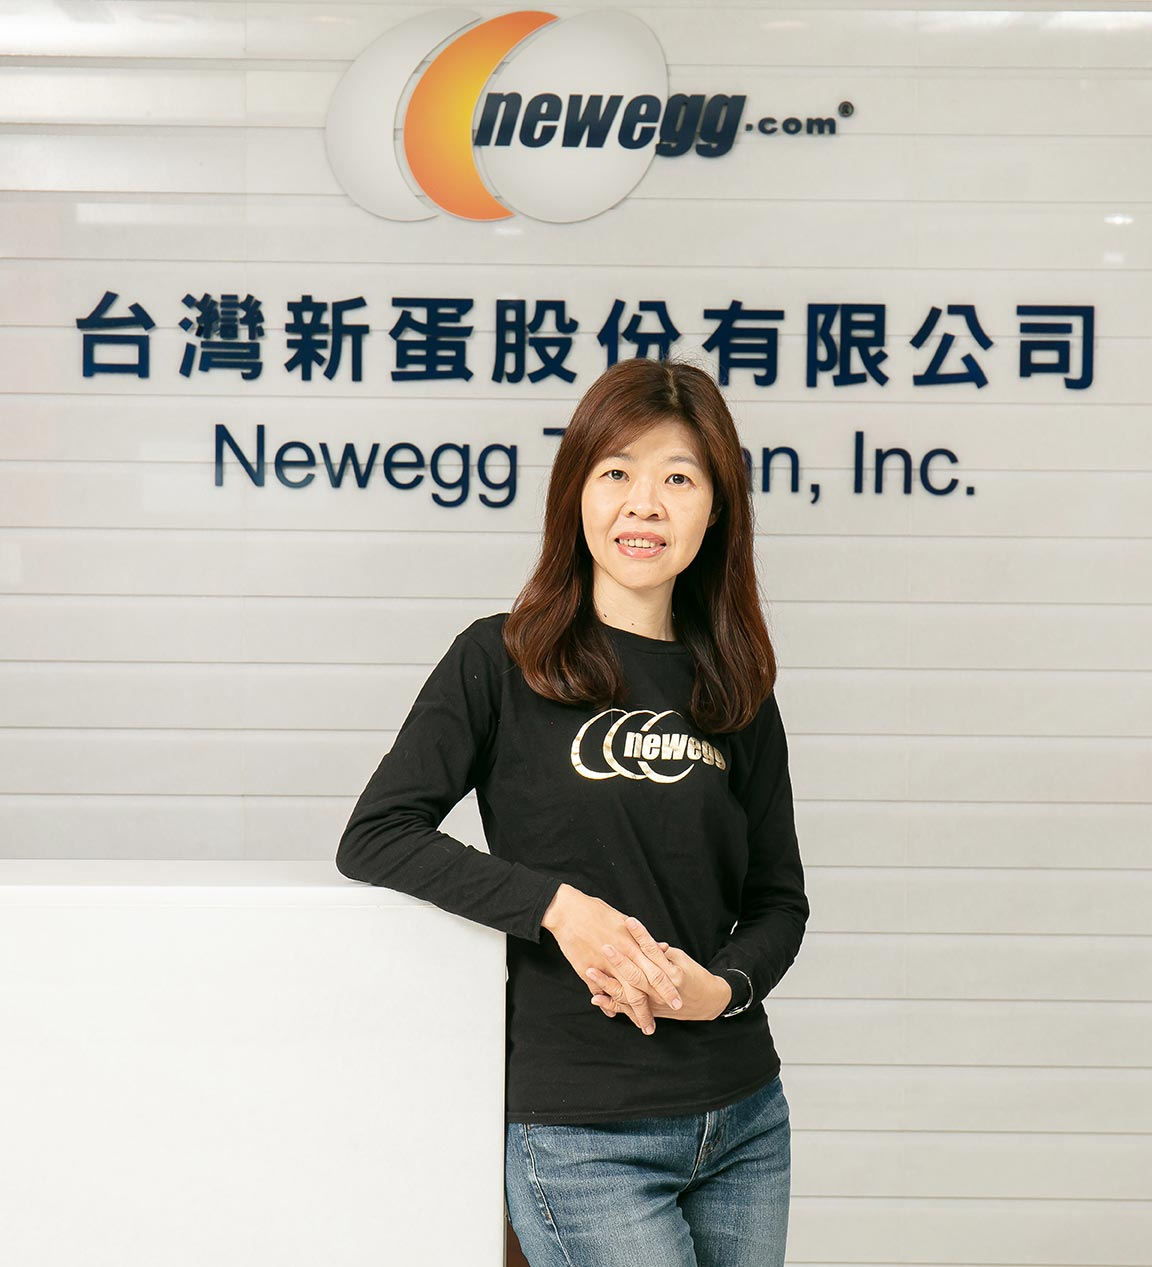 Newegg 台灣看準跨國線上購物的大浪潮，自 2021 年開始全面深耕台灣，攜手眾多台灣賣家利用電商拓銷全球。創造亮眼成績之後，Newegg 進一步以台灣作為亞太招募中心，期能聯合亞太地區的各國賣家，乘著電商浪潮、航向全球市場。